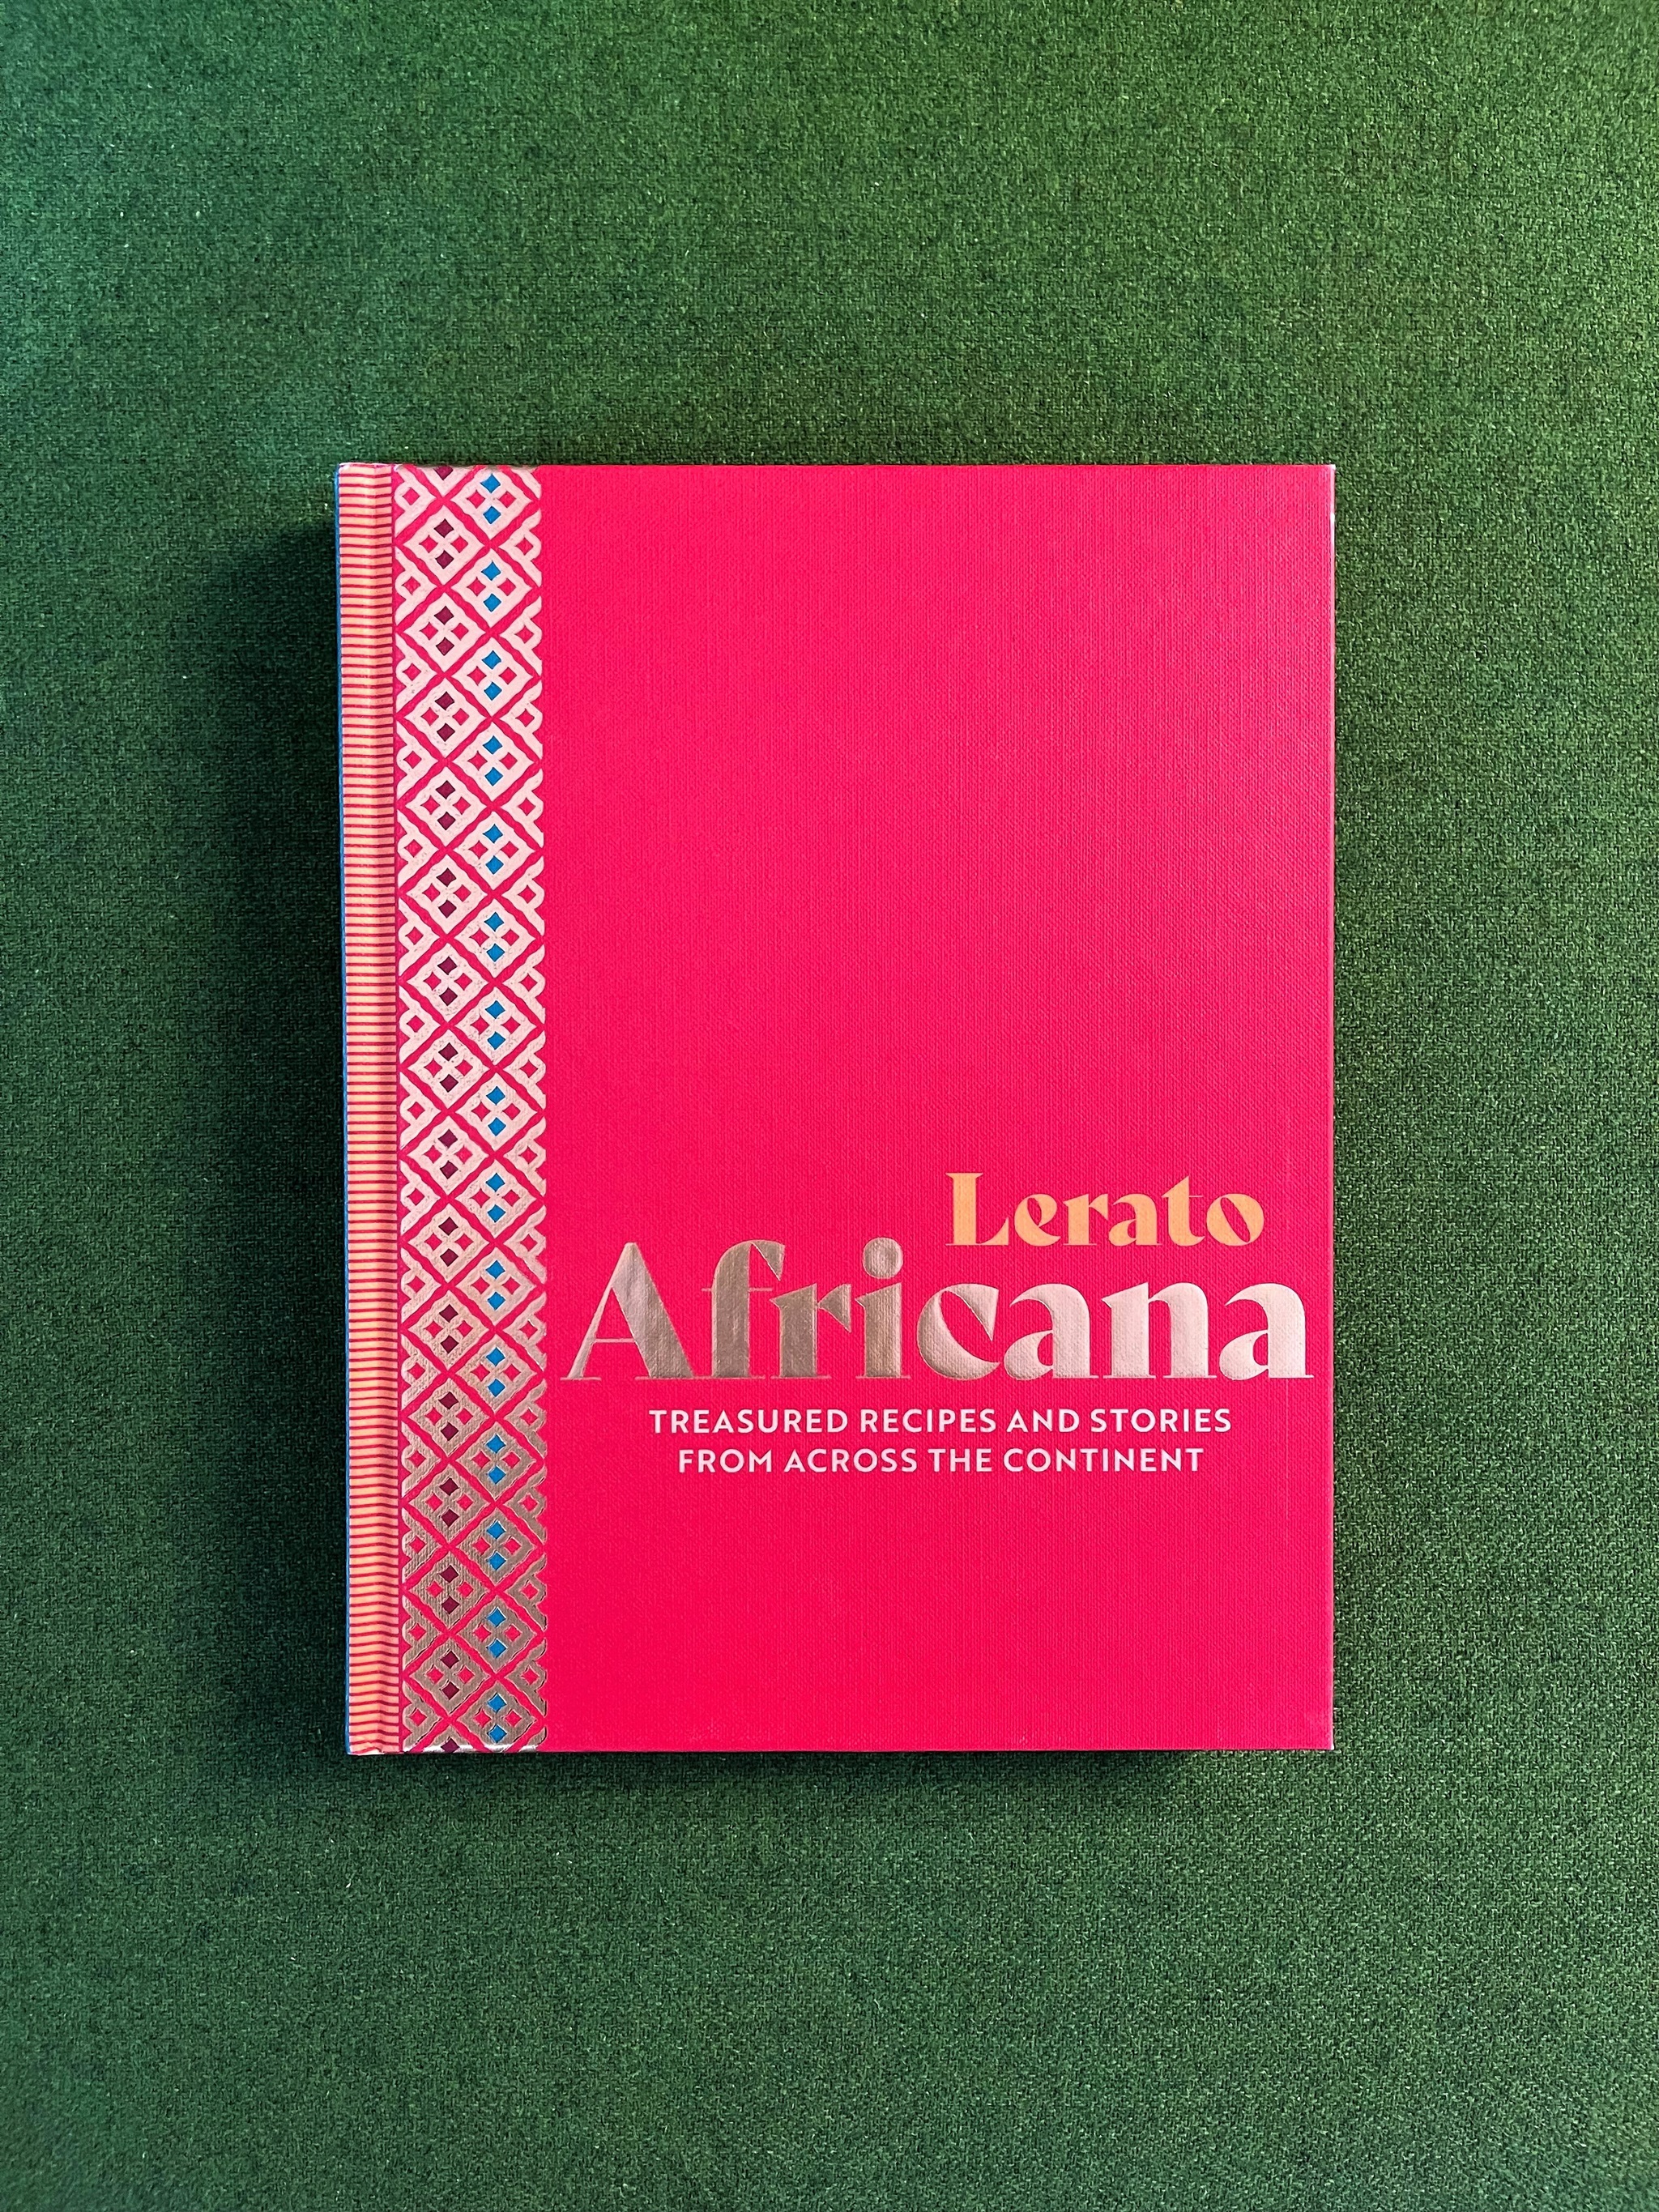 Africana by Lerato